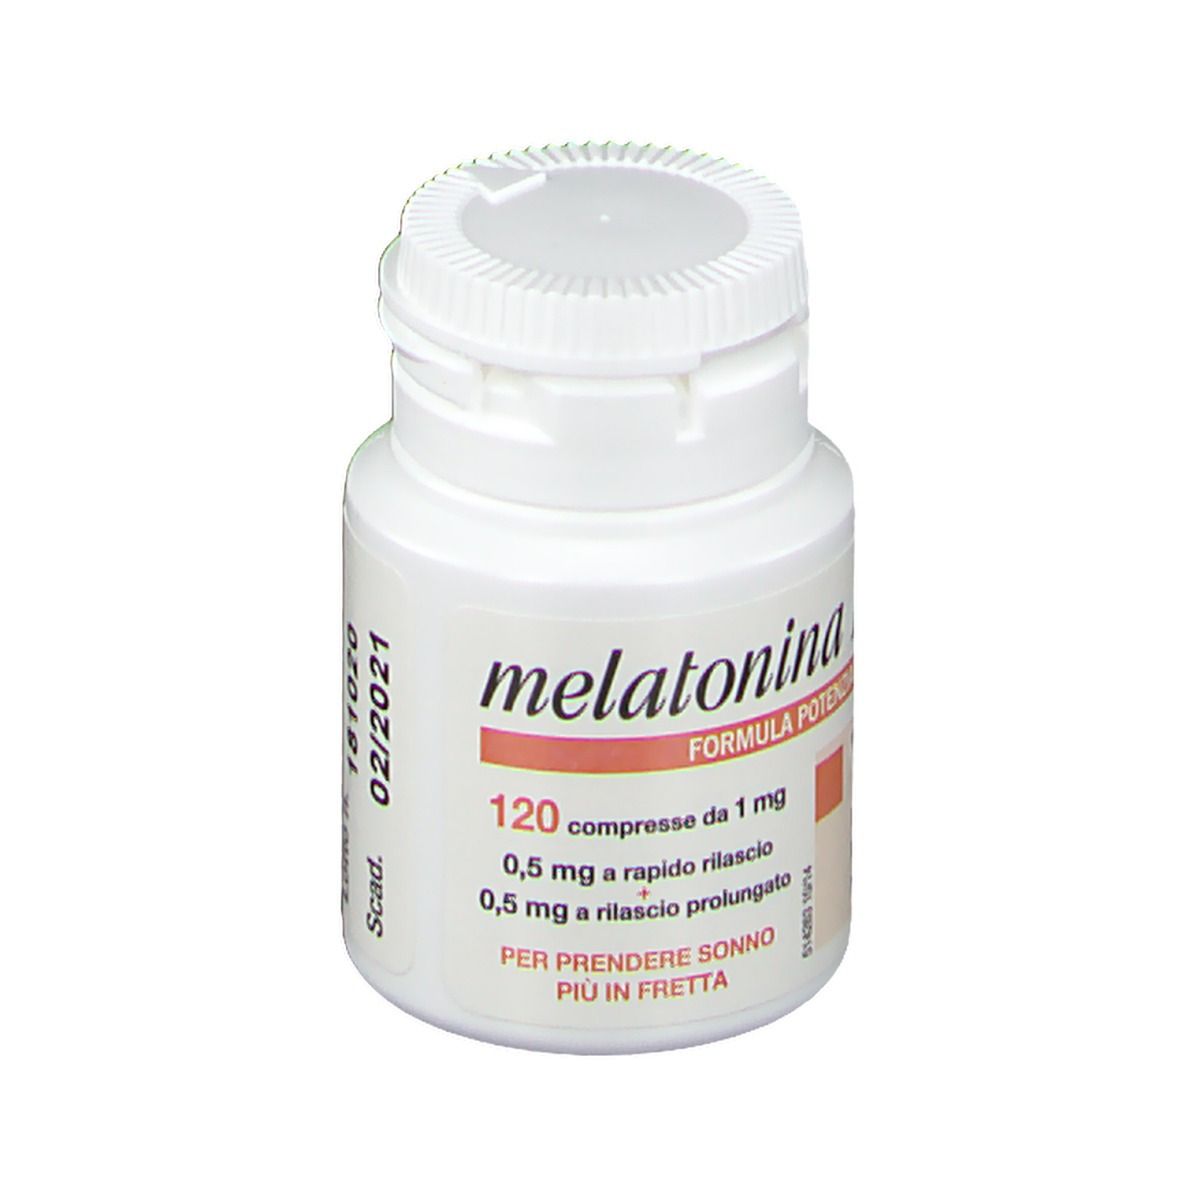 melatonina DISPERT 120